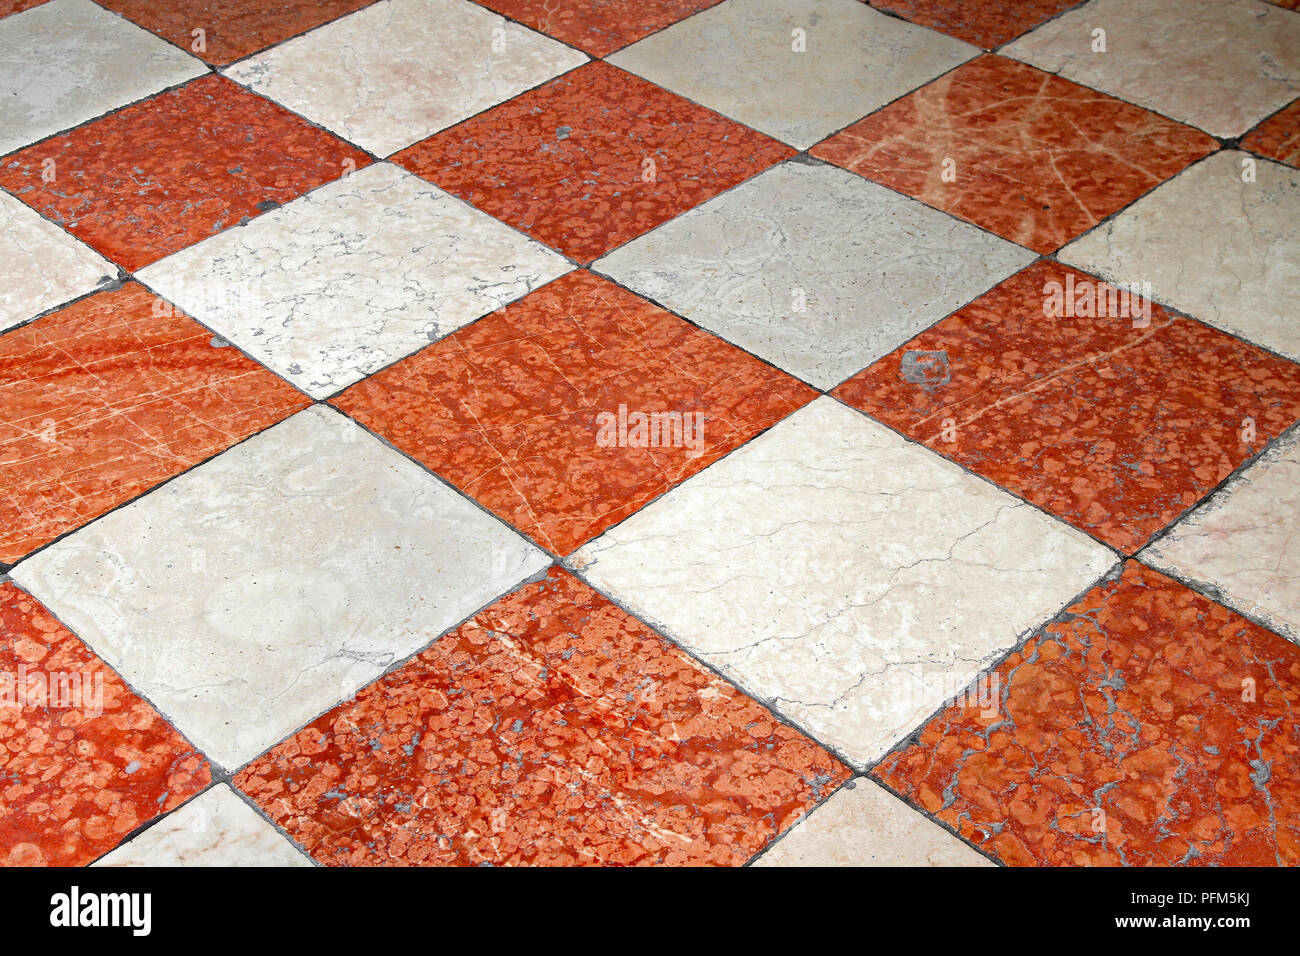 Red marble floor tiles Photo -